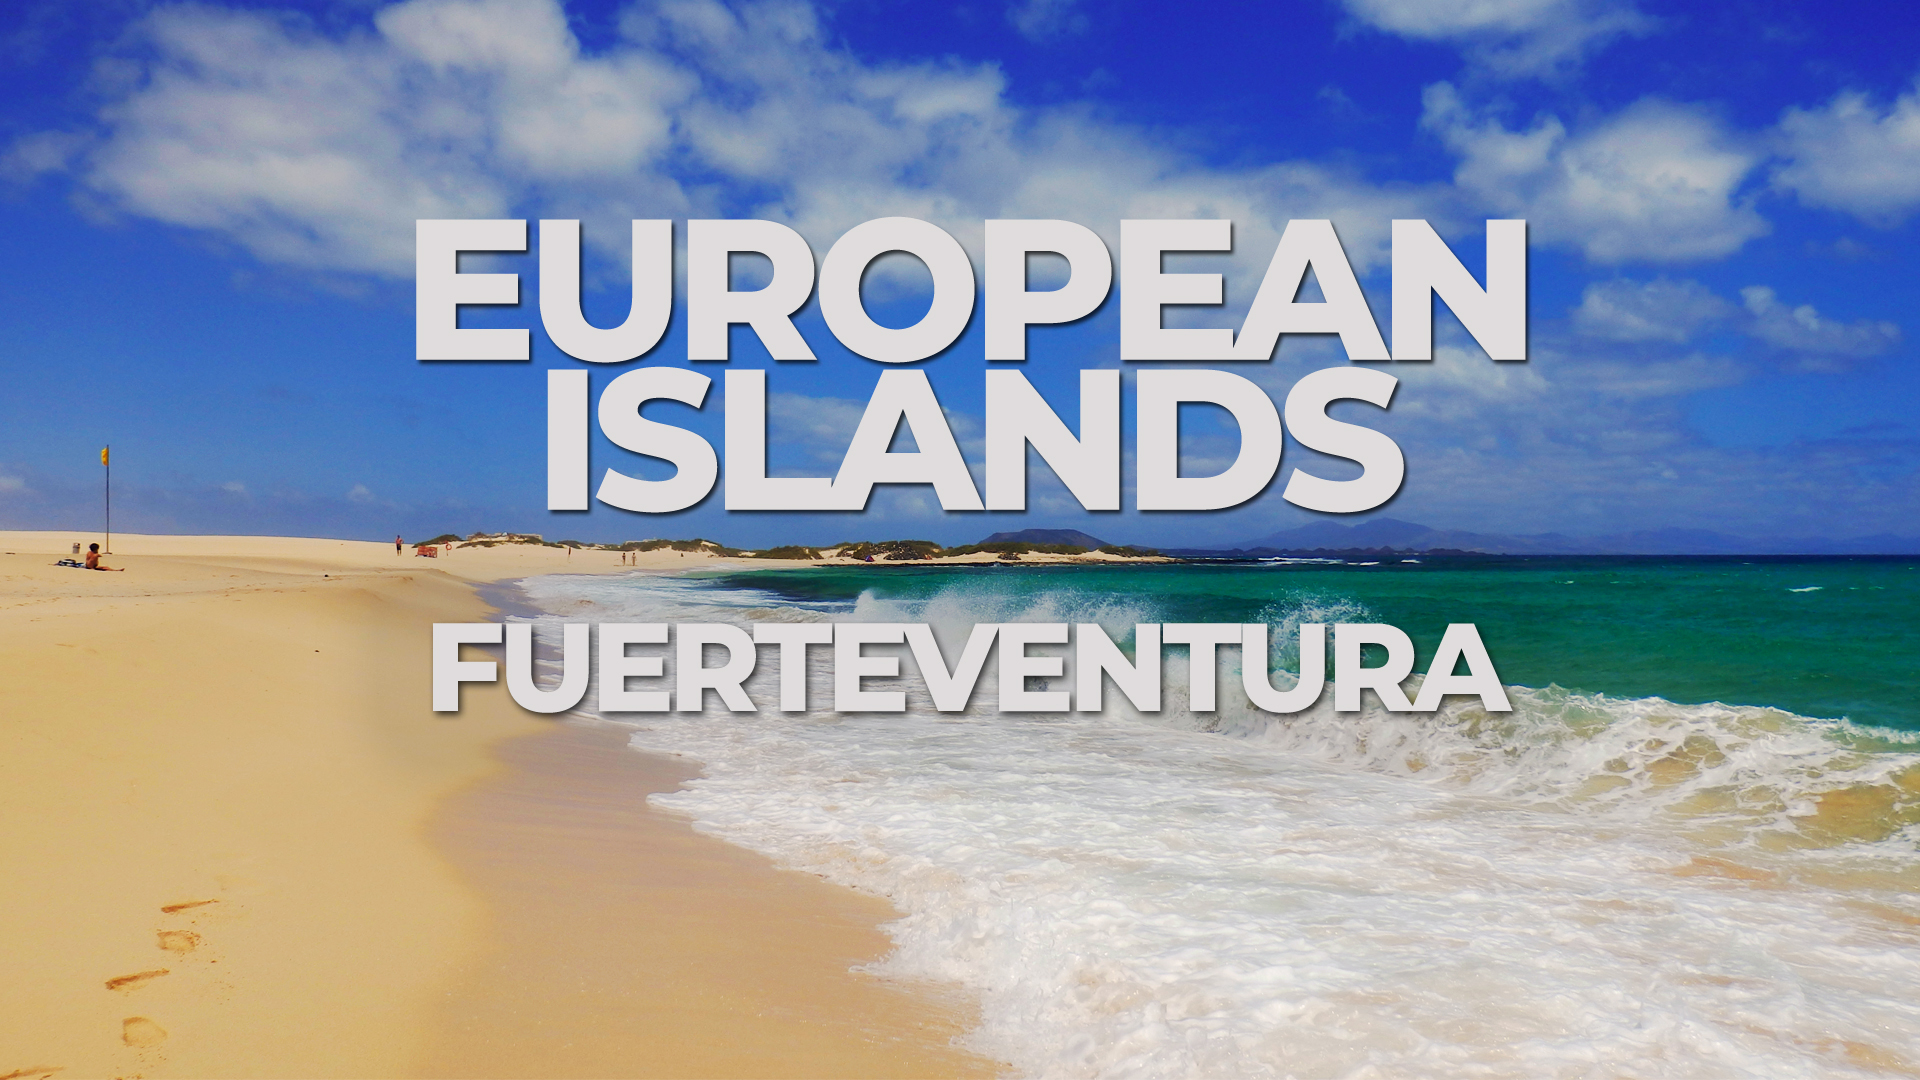 European Islands Fuerteventura